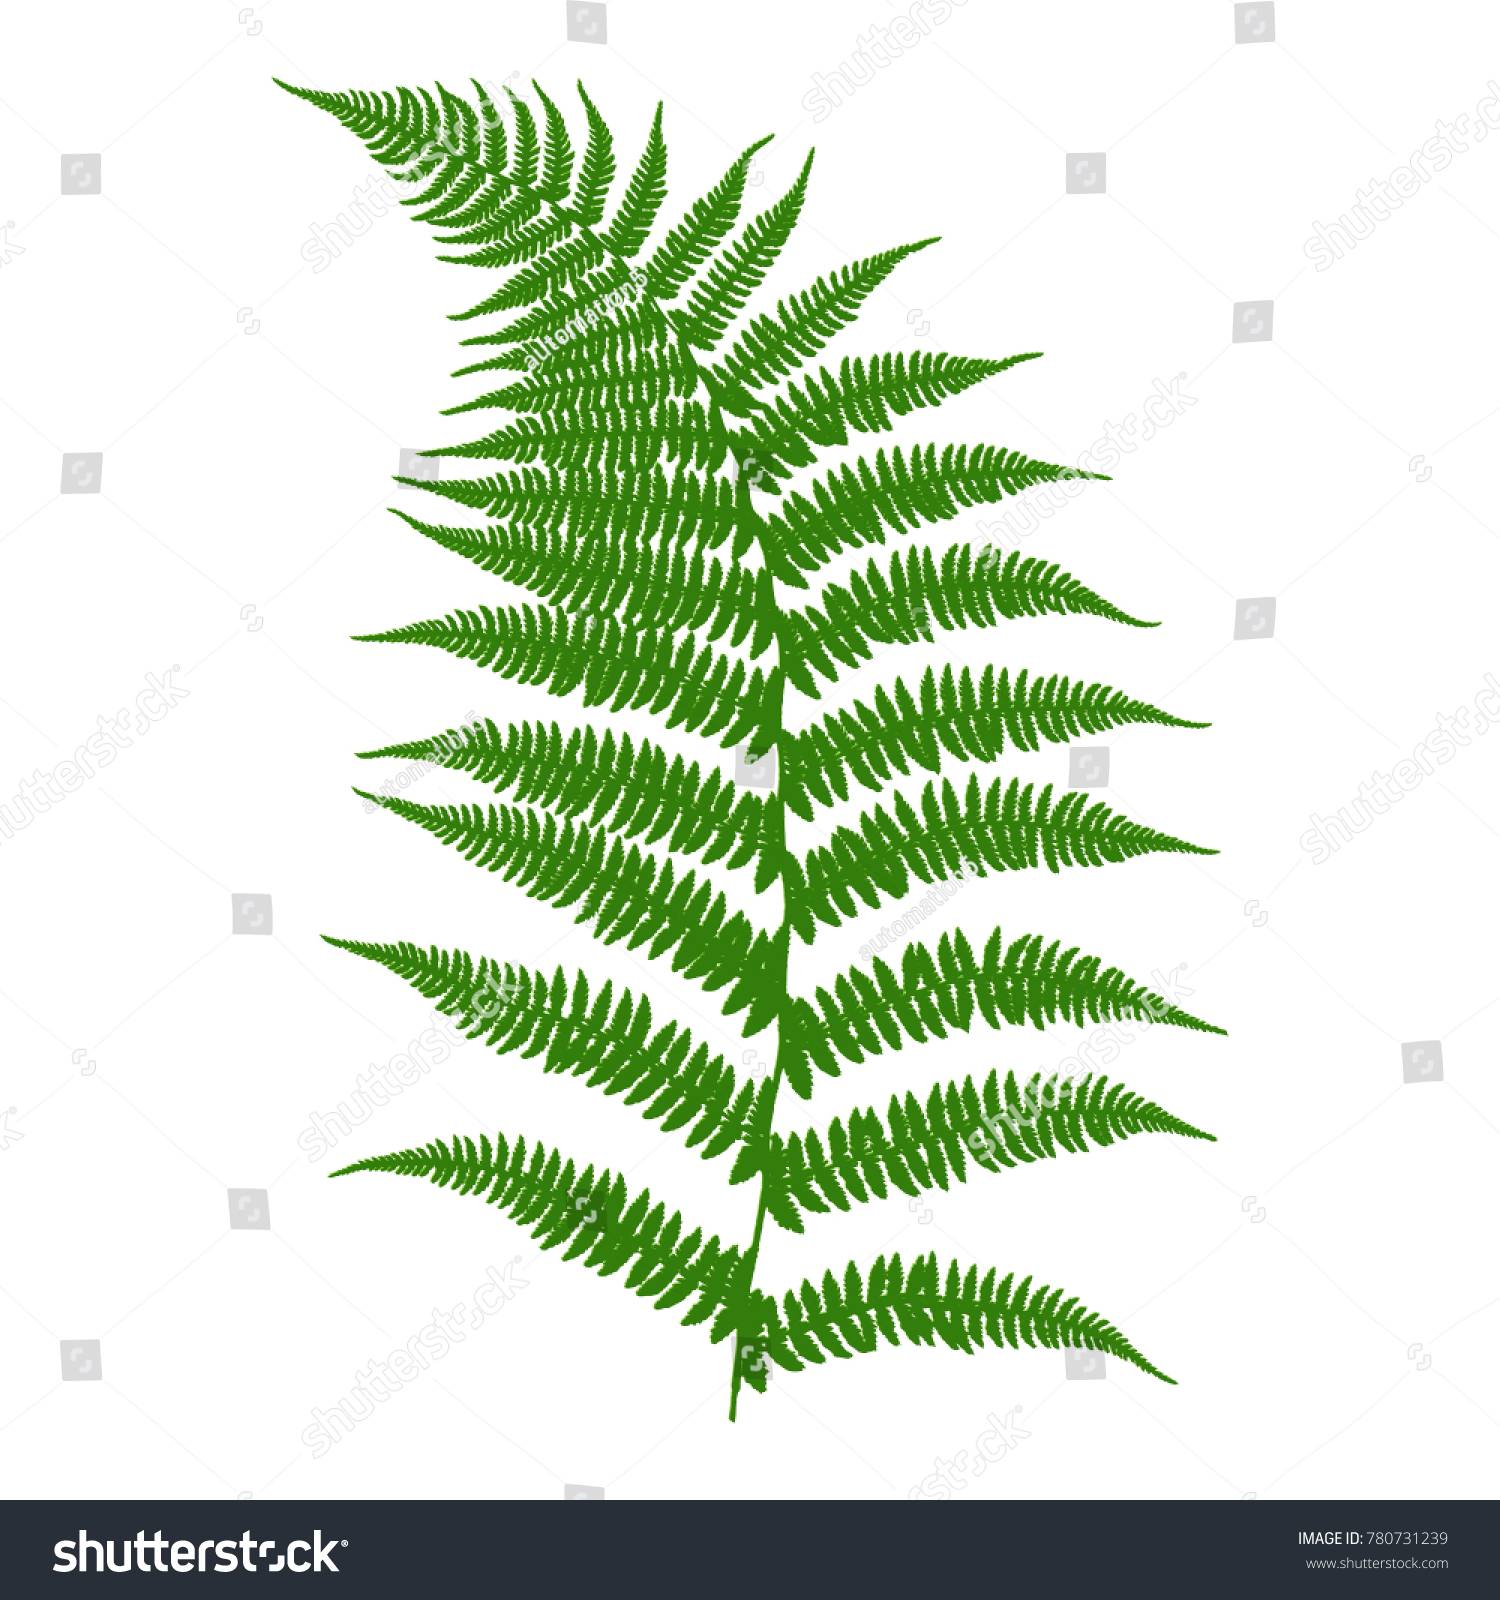 Fern Image Green Fern Leaf On Stock Vector (2018) 780731239 ...